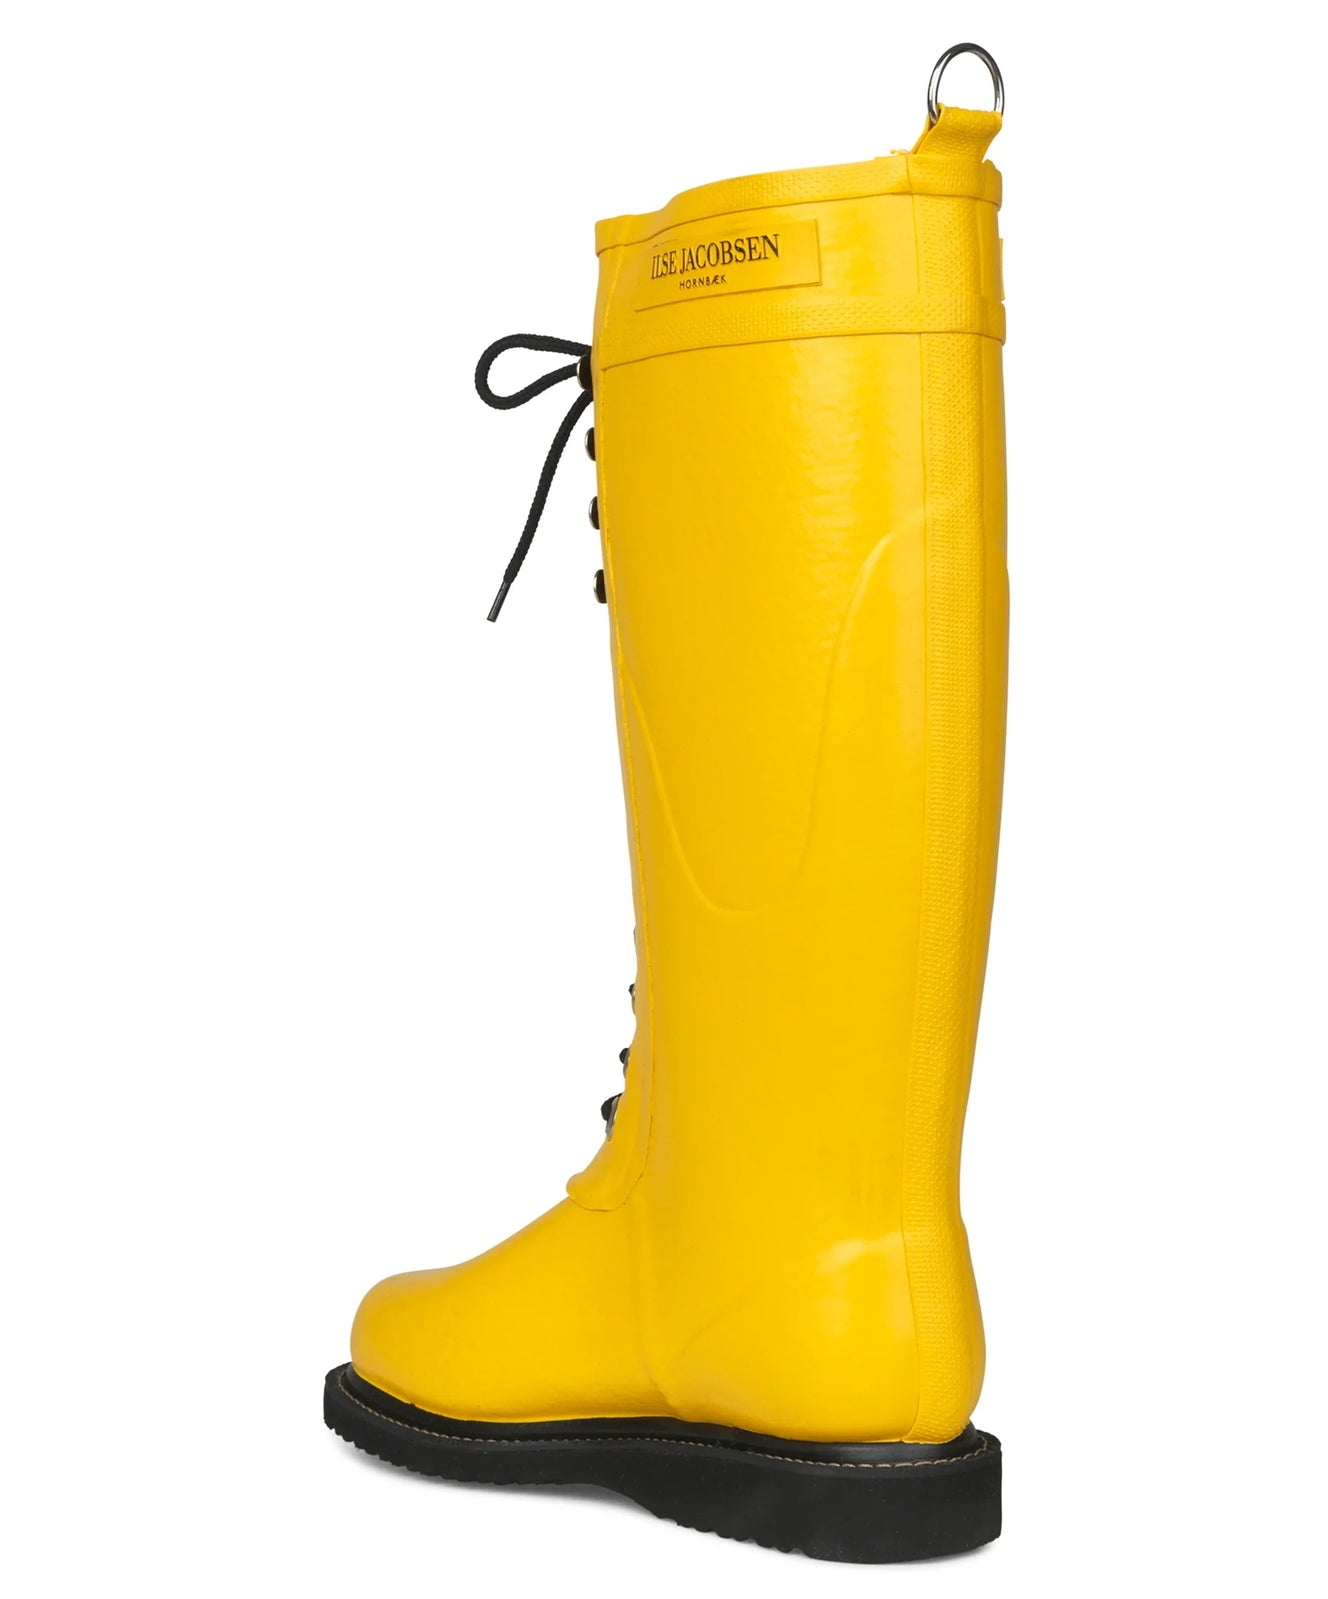 Ilse Jacobsen Long Lace Boots Yellow